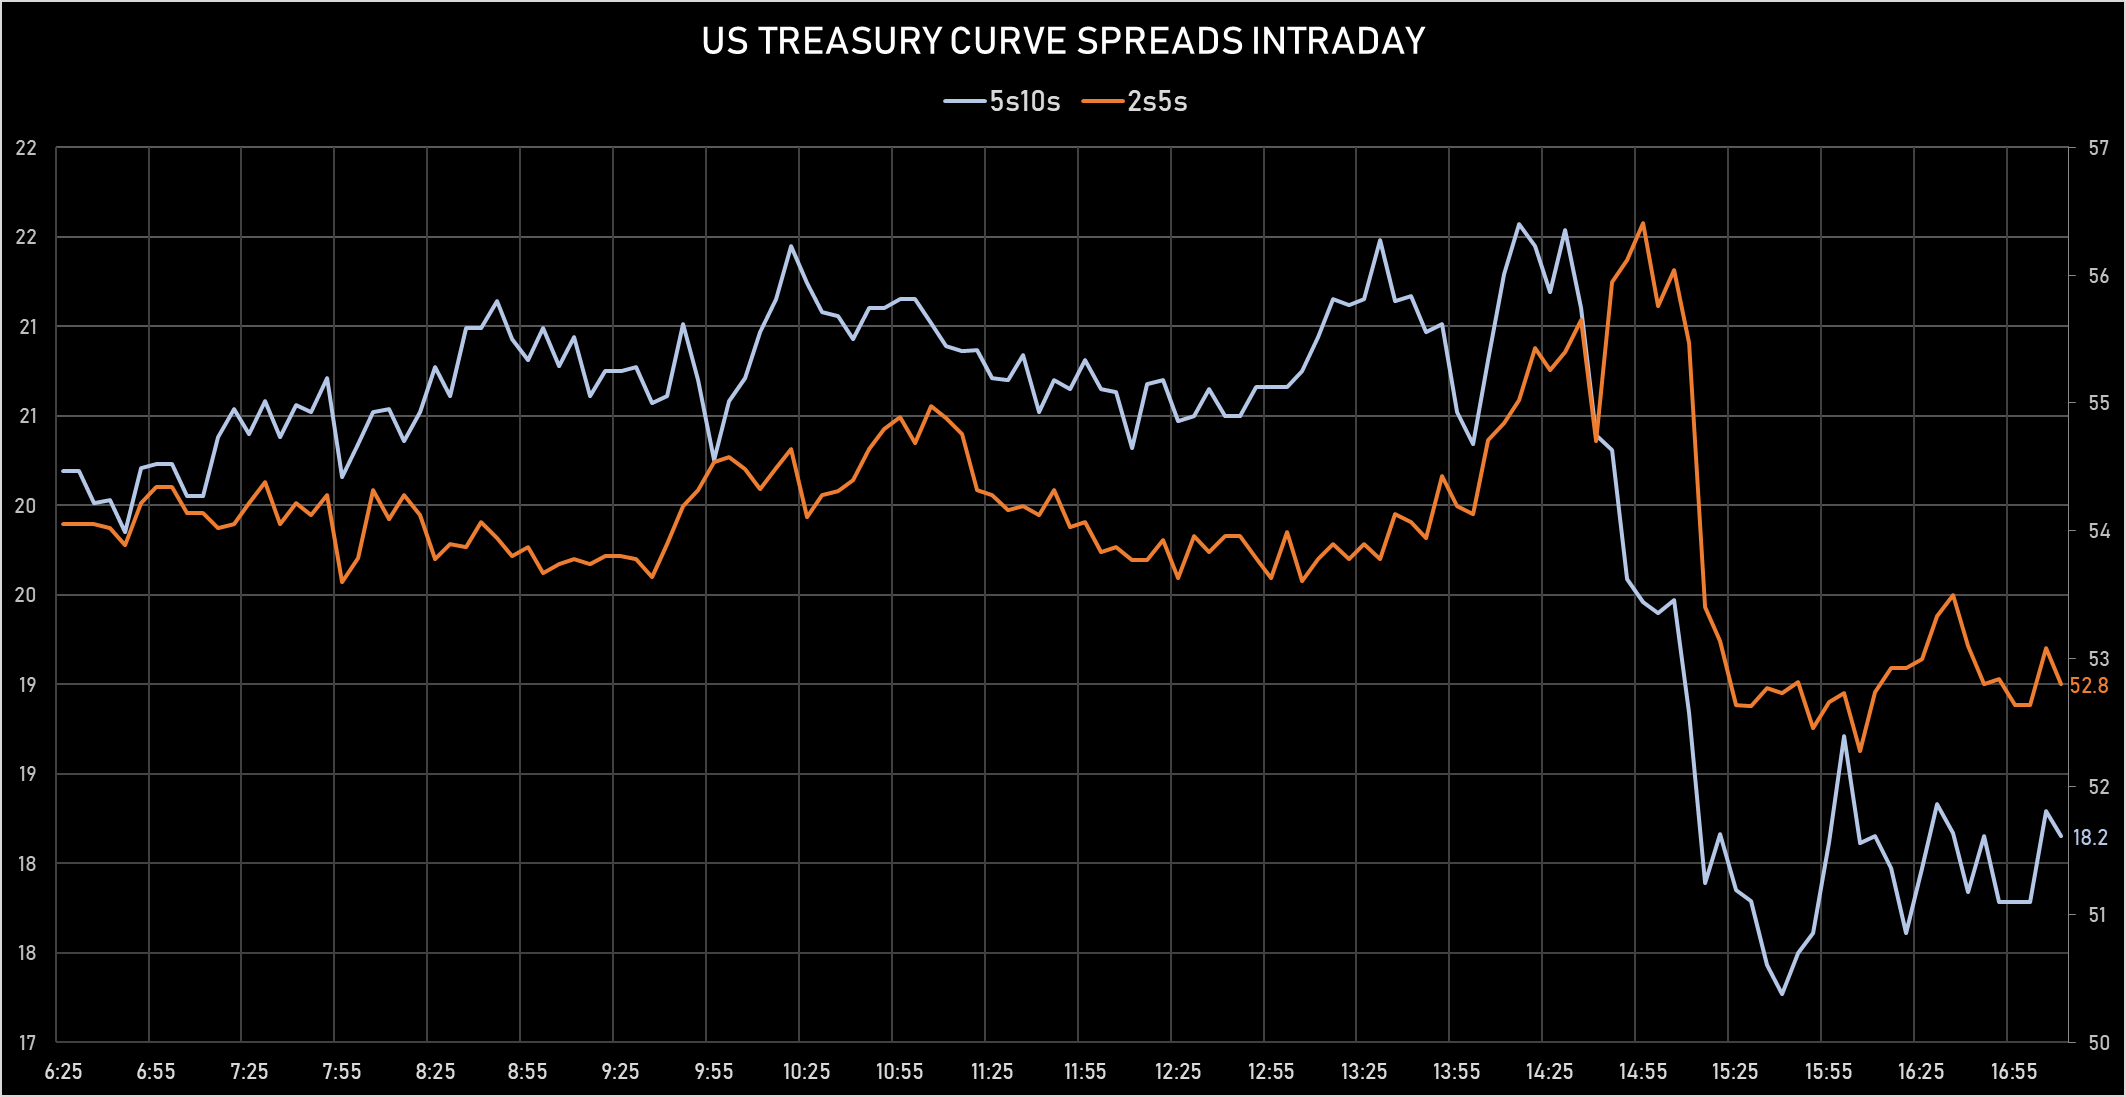 US treasury Curve Spreads Intraday | Sources: phipost.com, Refinitiv data